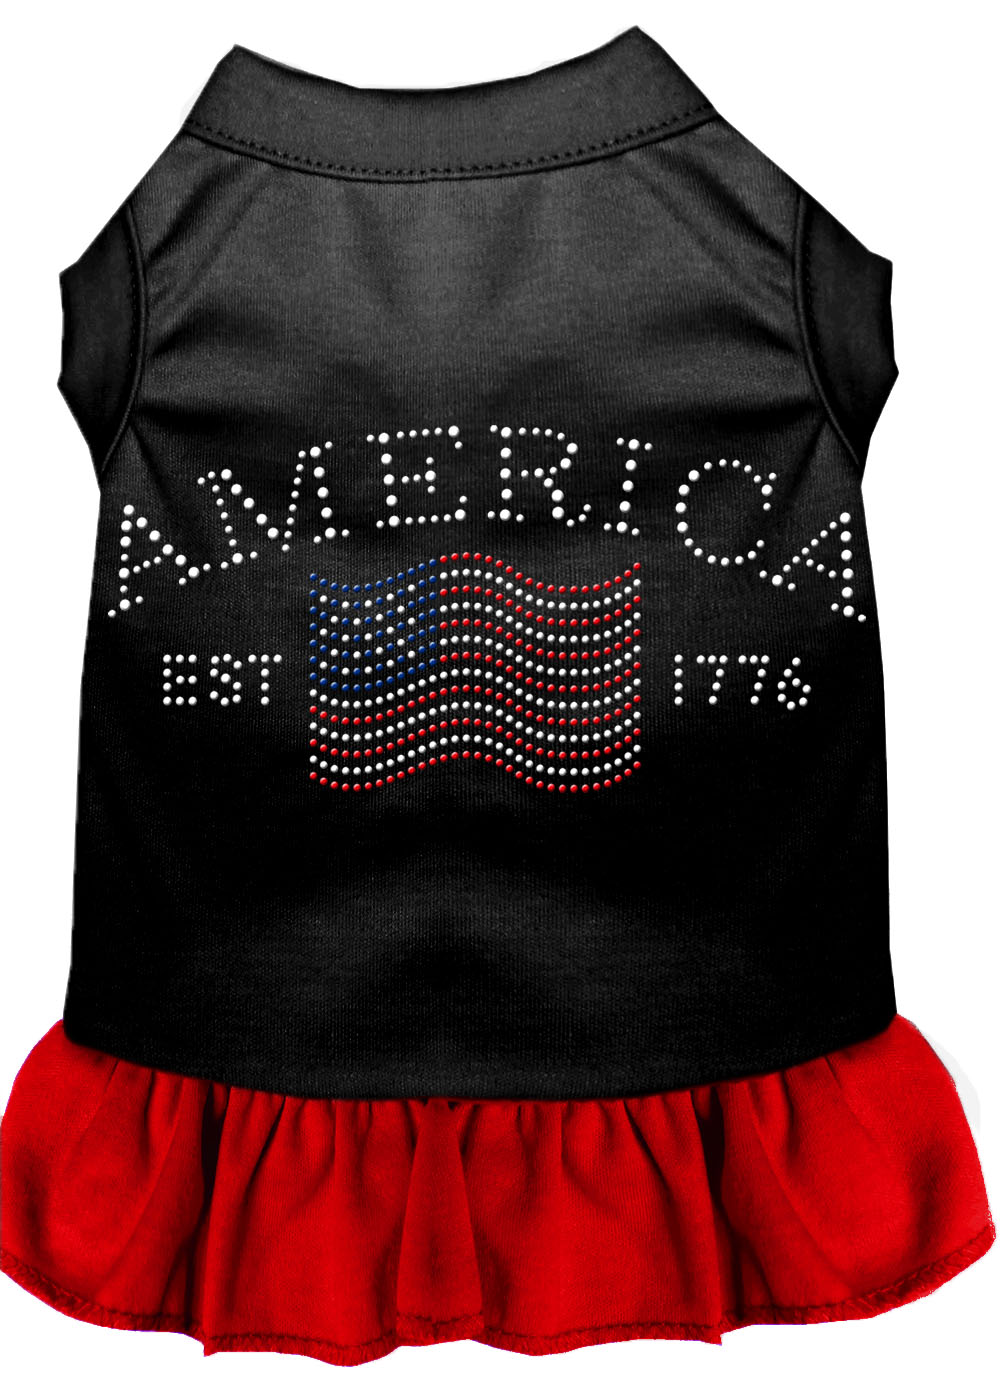 Classic America Rhinestone Dress Black with Red Lg